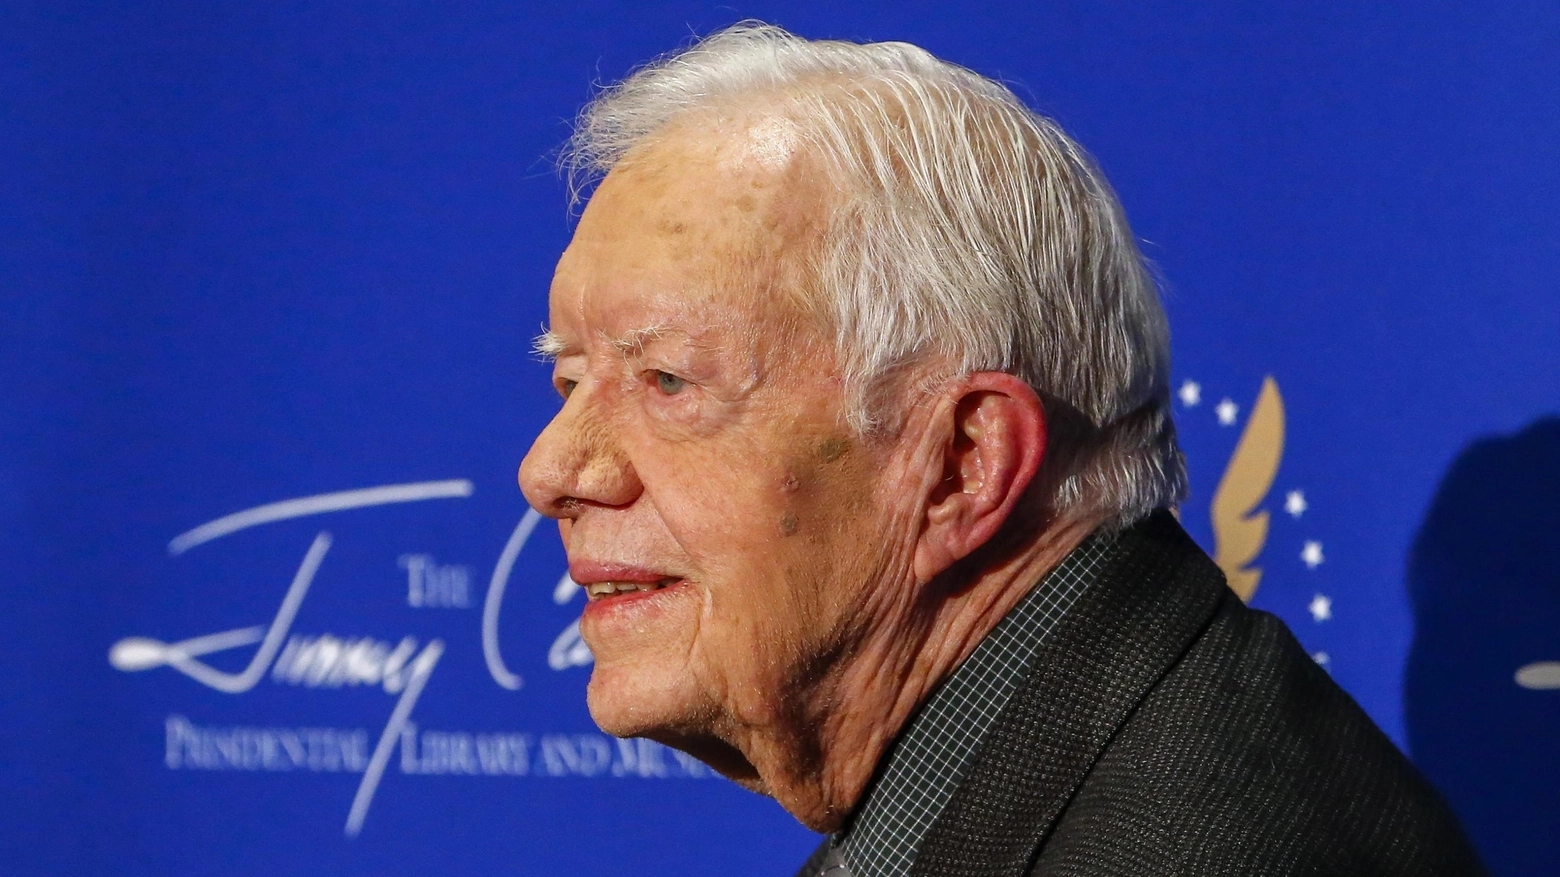 Jimmy Carter è stato il 30° presidente degli Usa (Ansa)